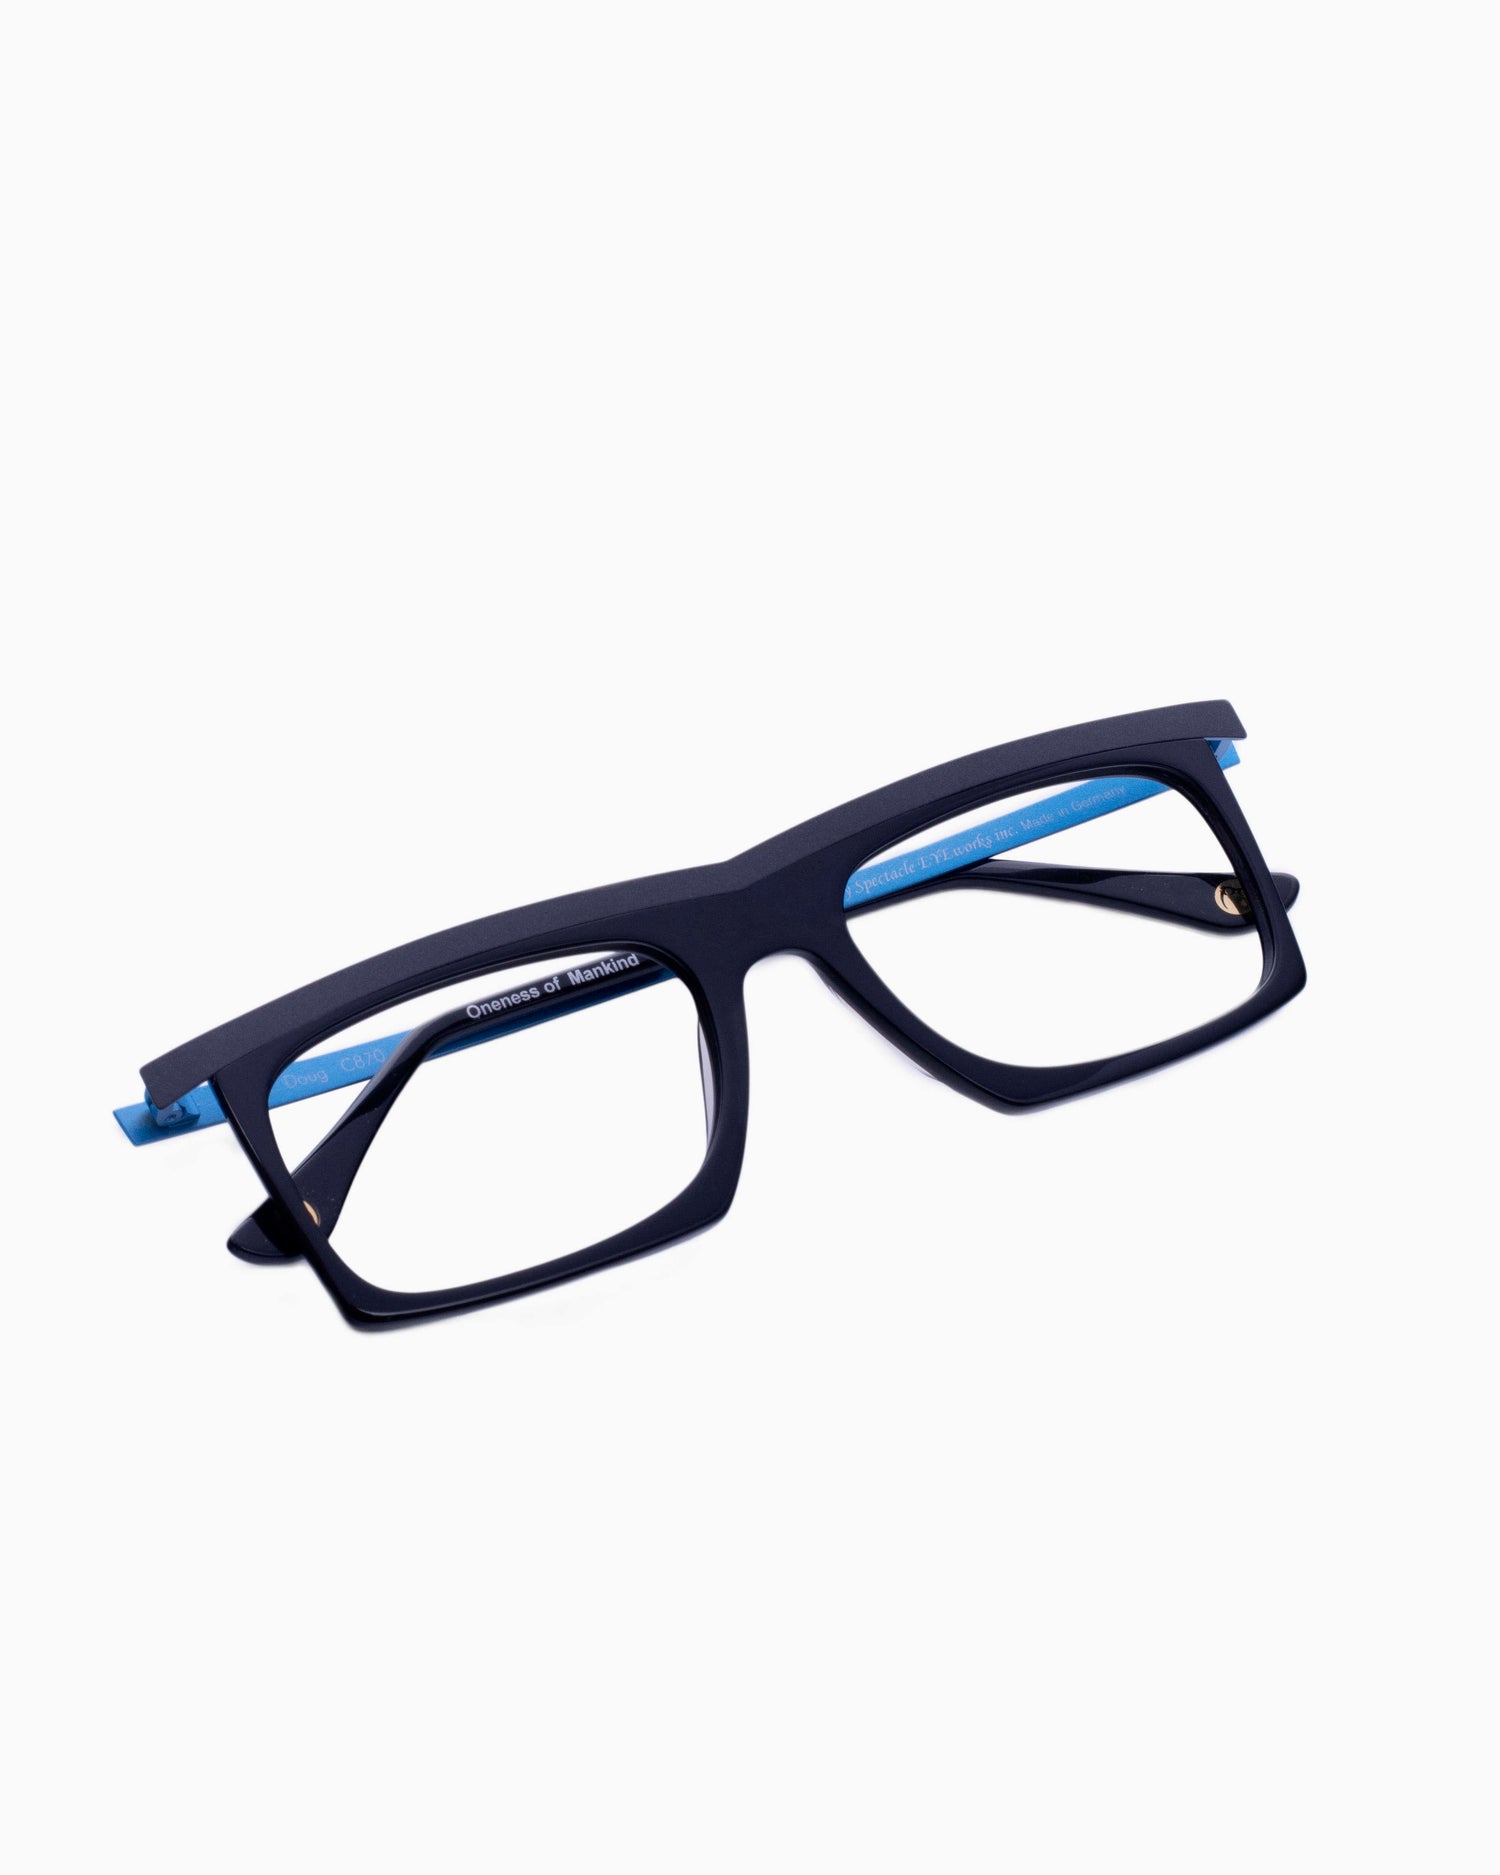 Spectacleeyeworks - Doug - C870 | Bar à lunettes:  Marie-Sophie Dion